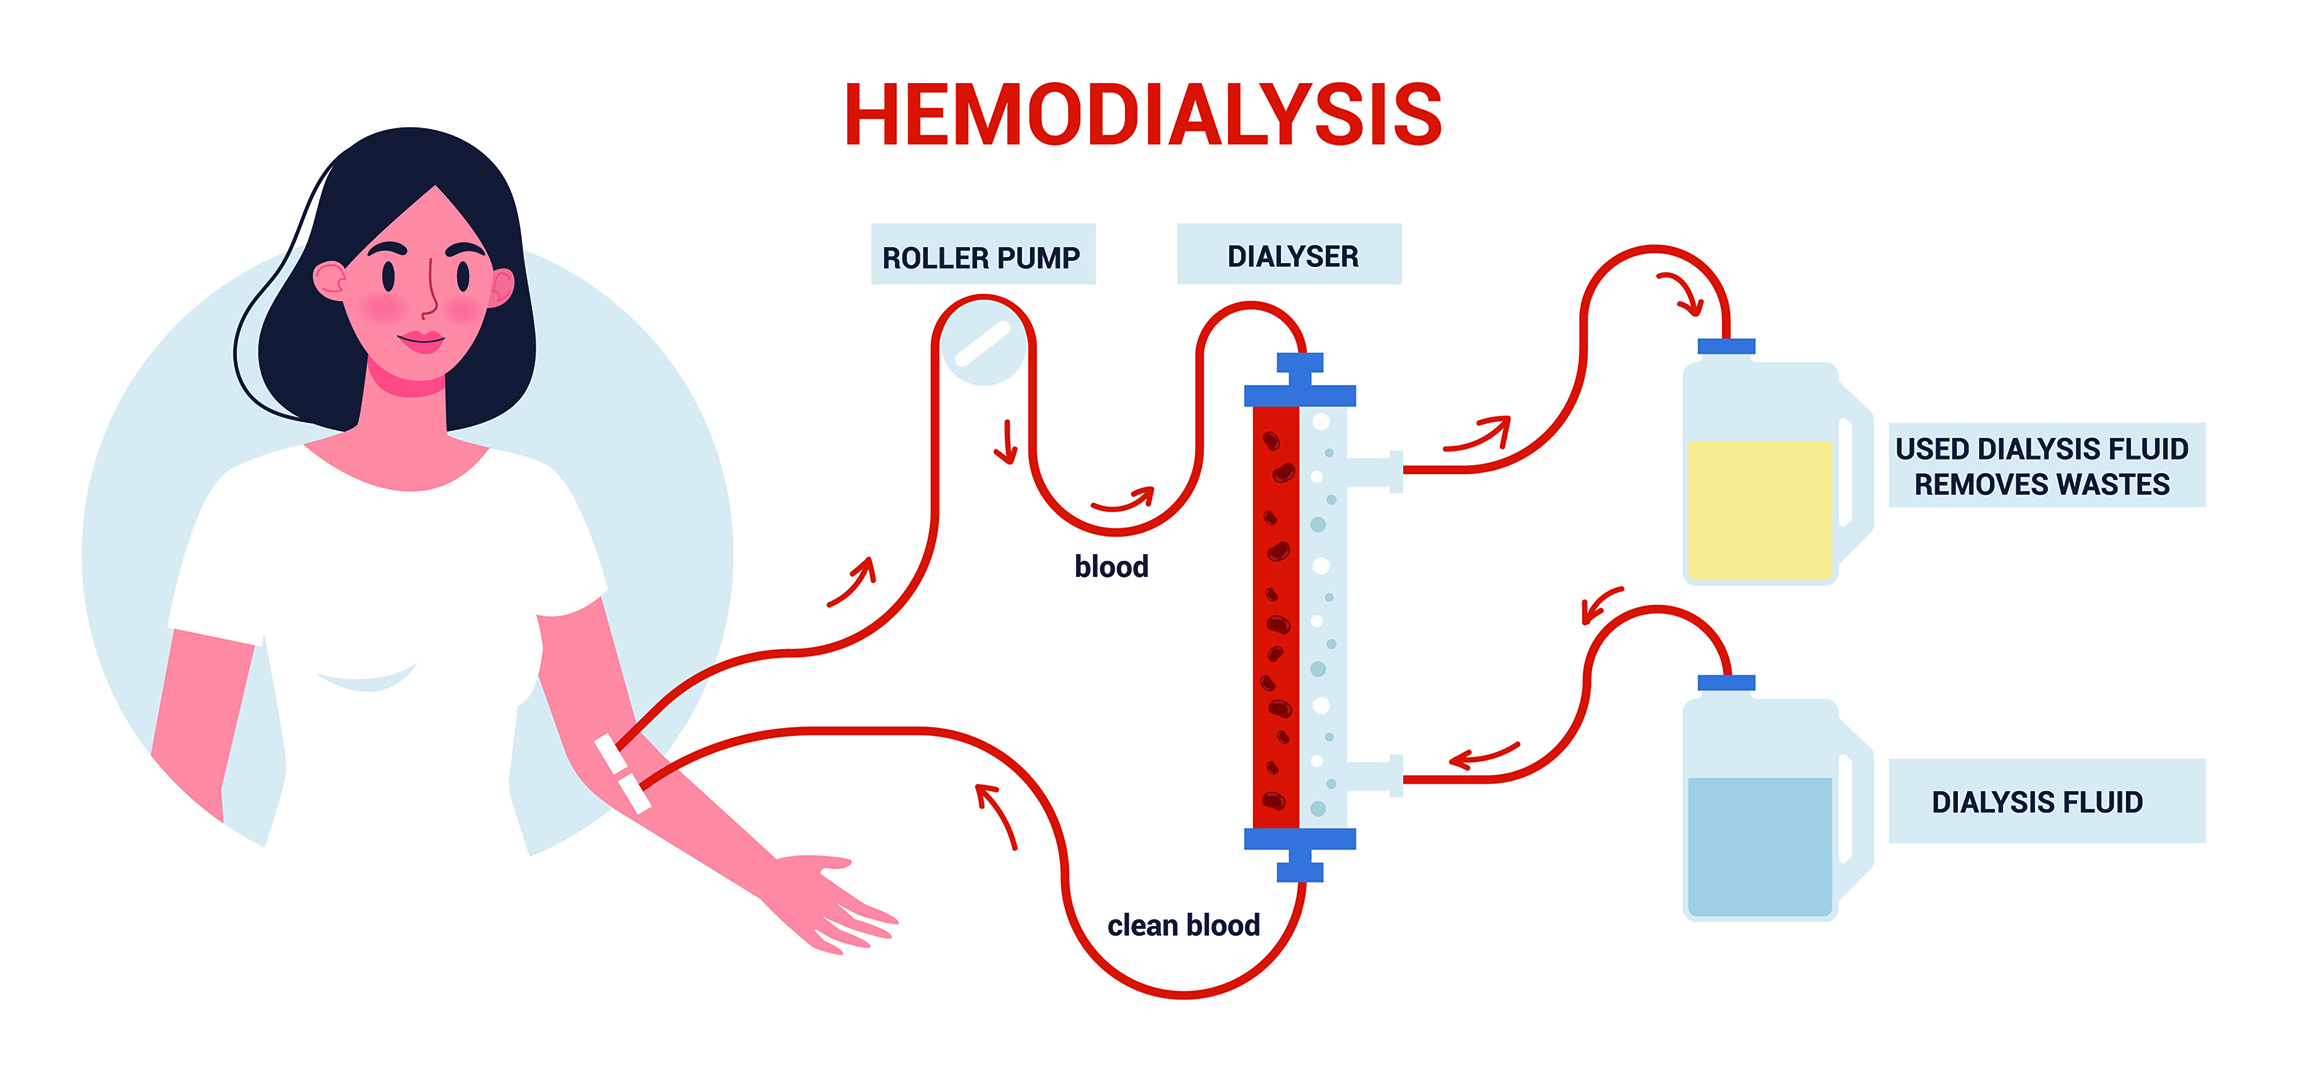 Hemodialysis: Lifesaving Treatment for Kidney Disease